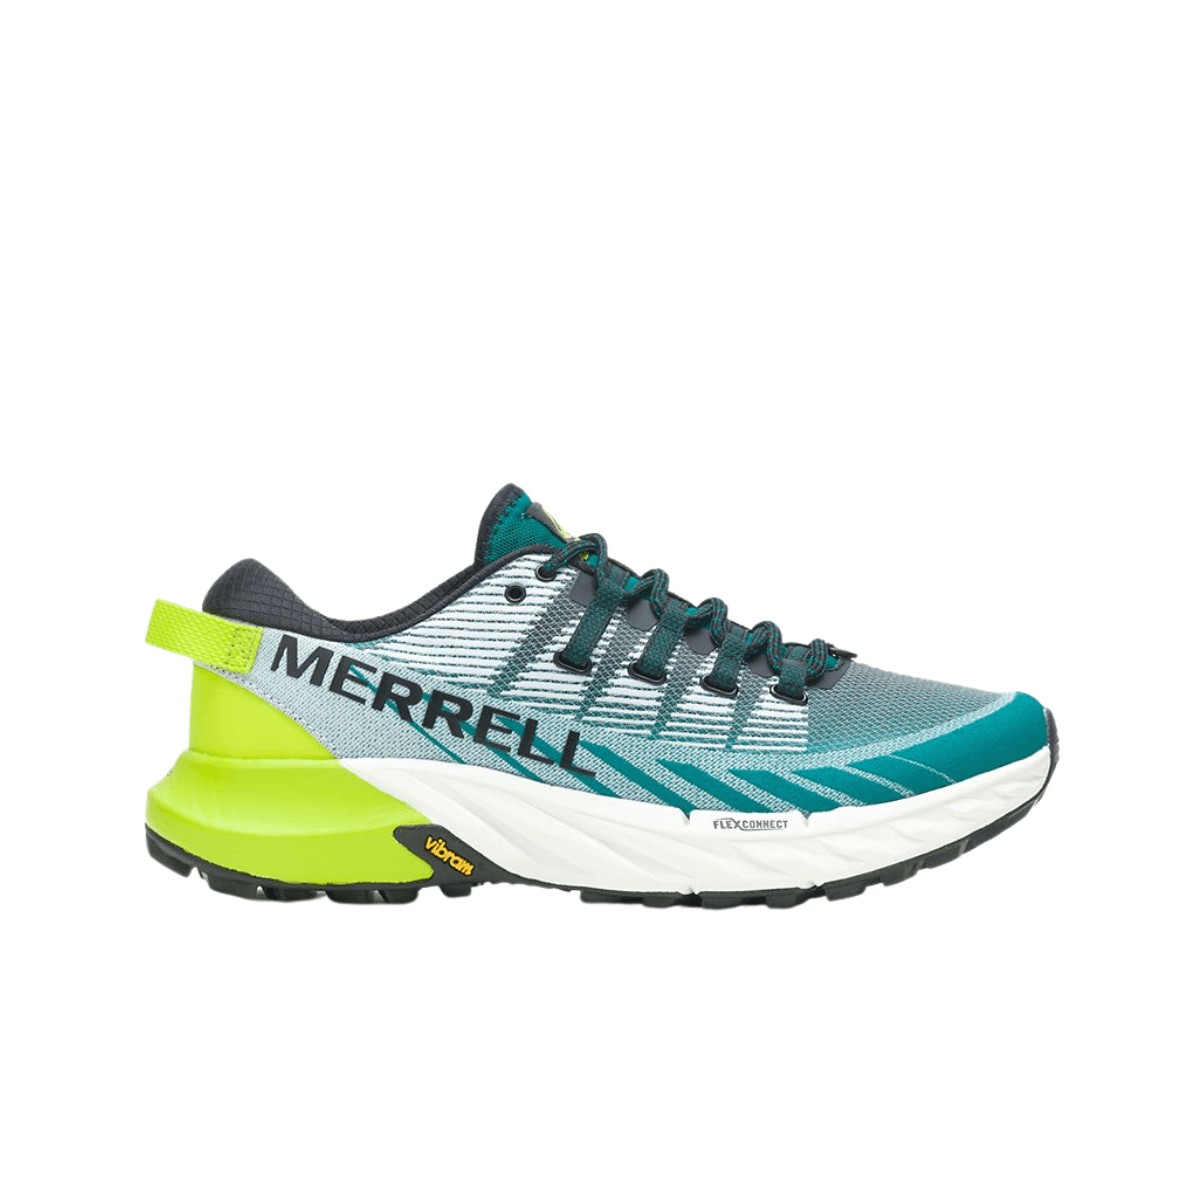 Shoes Merrell Agility Peak 4 Green Turquoise AW22, Size 41,5 - EUR